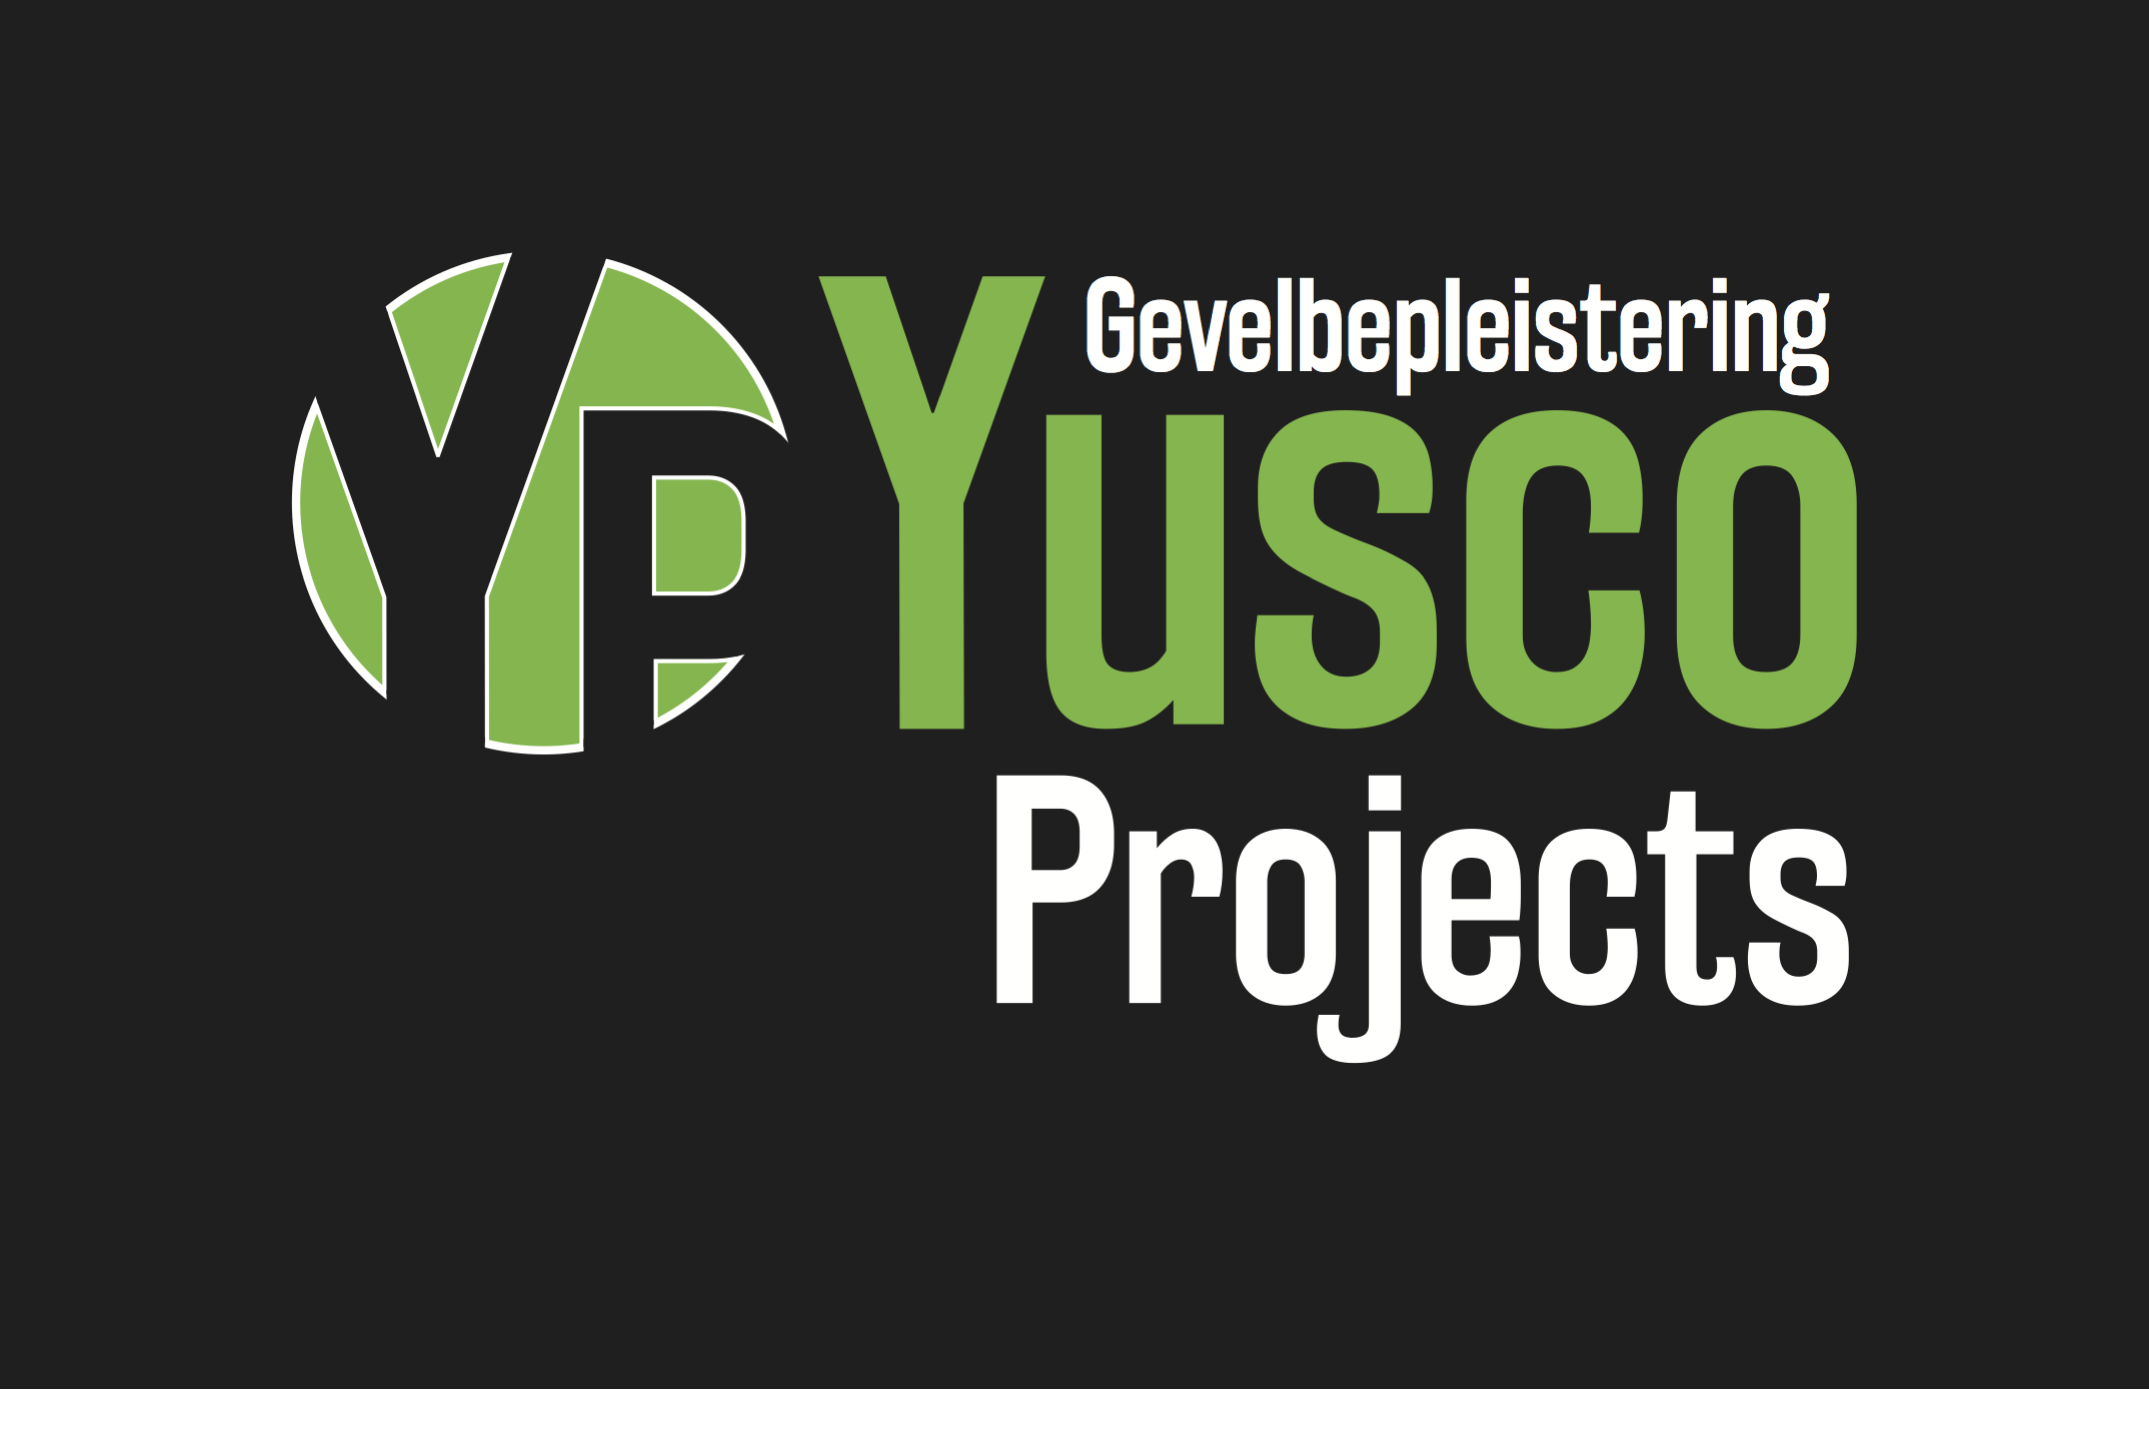 stukadoors Smetlede Yusco Projects Gevelbepleistering